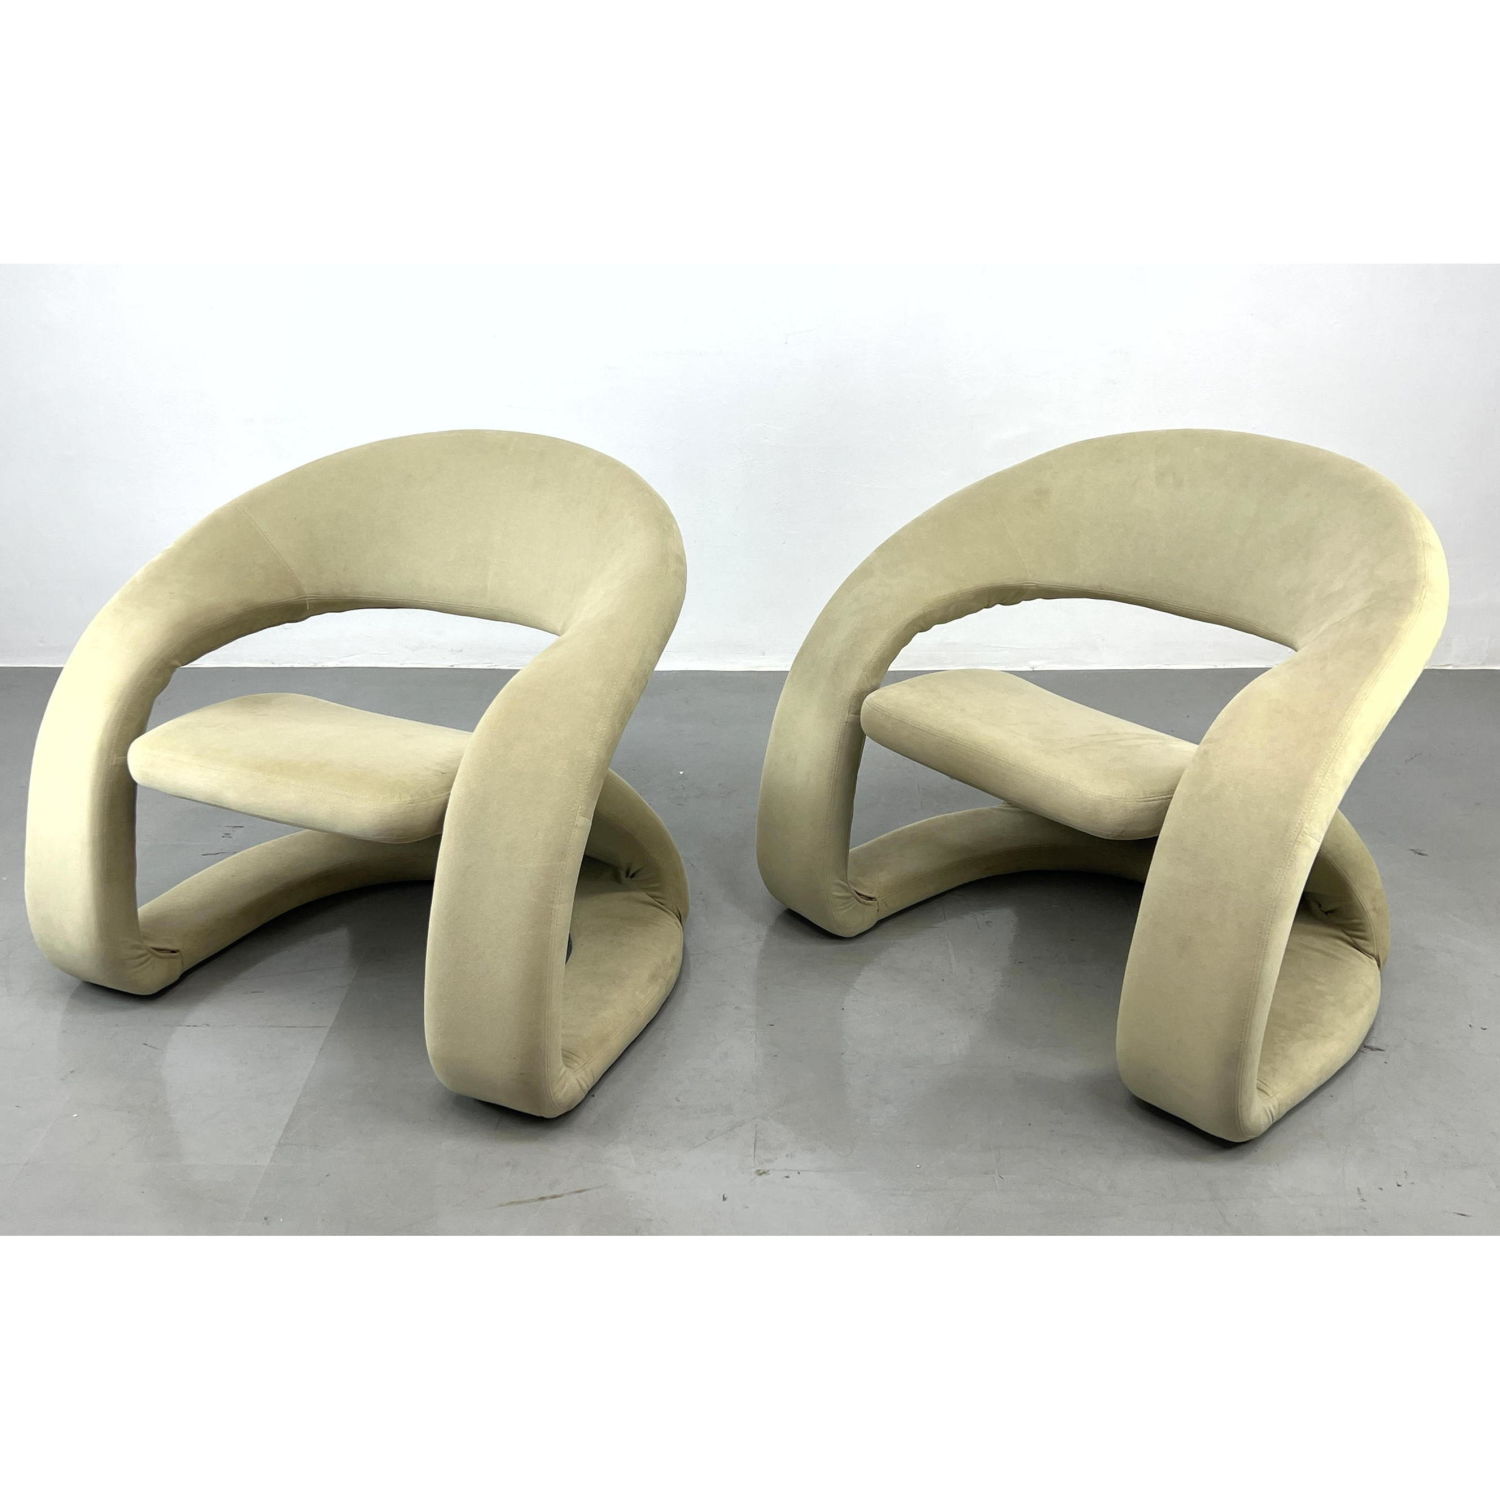 Pr JAYMAR Modernist Lounge Chairs.